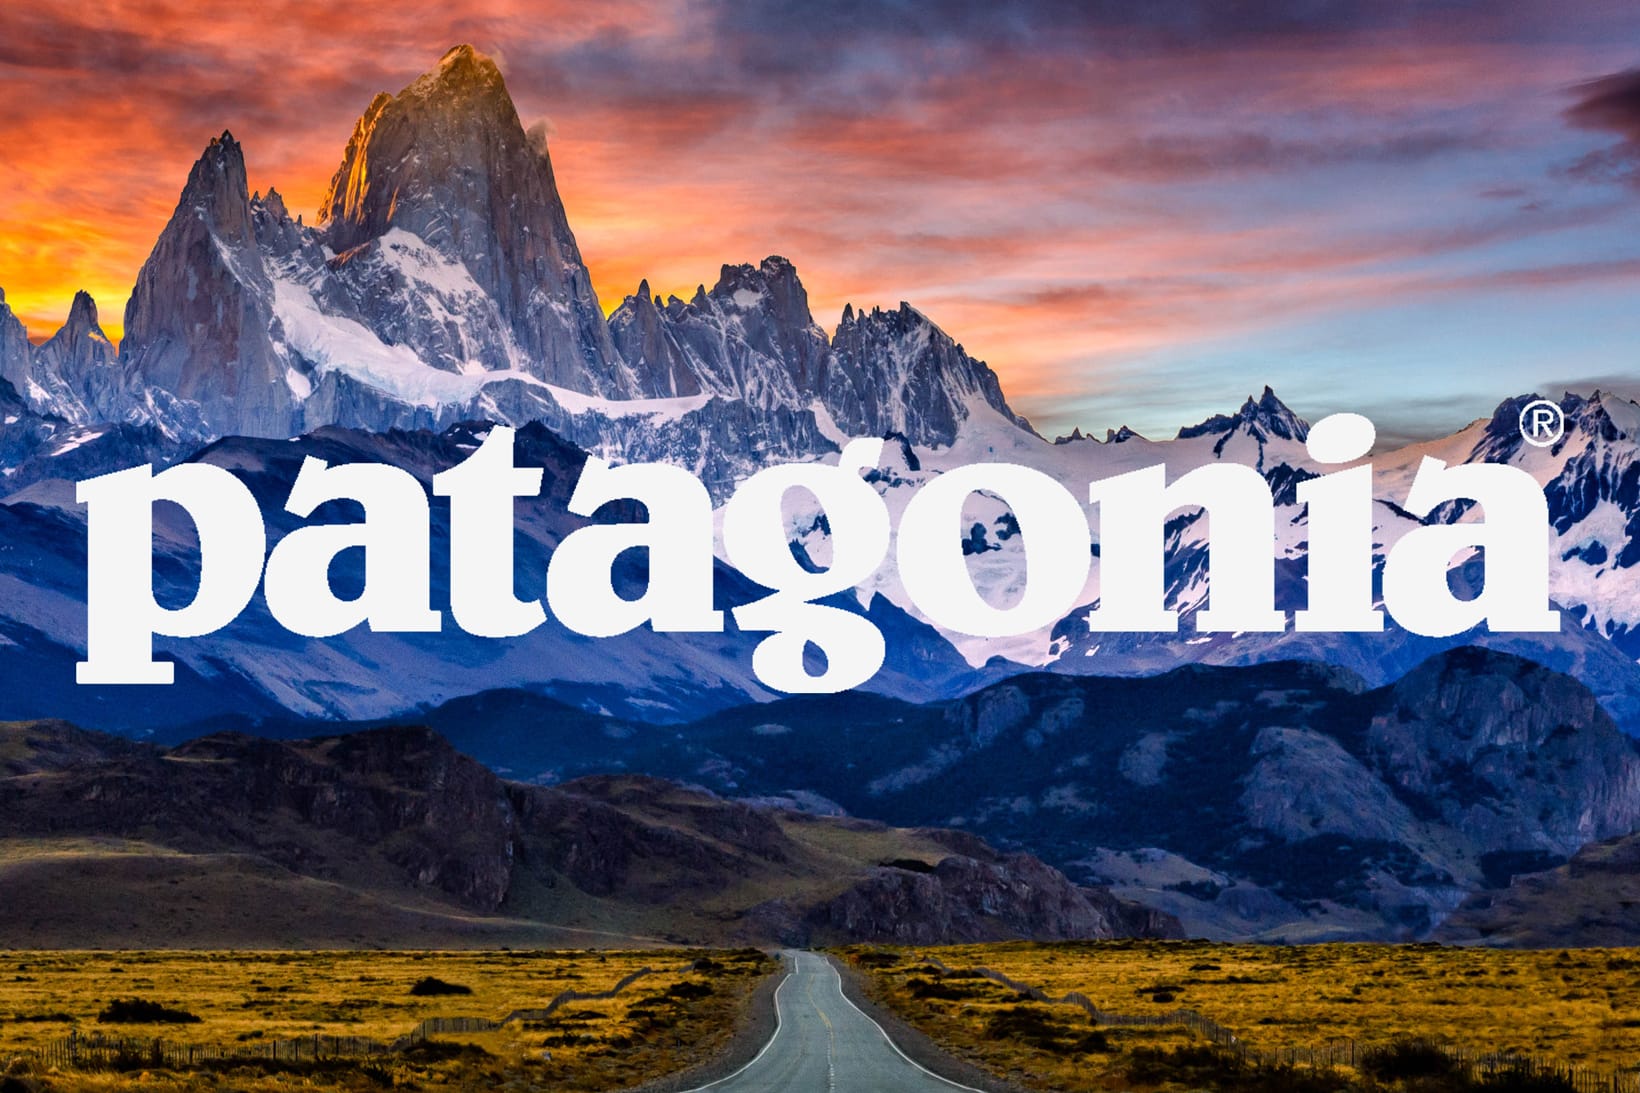 Patagonia(メンズレトロパイルジャケット)サイズLサイズ